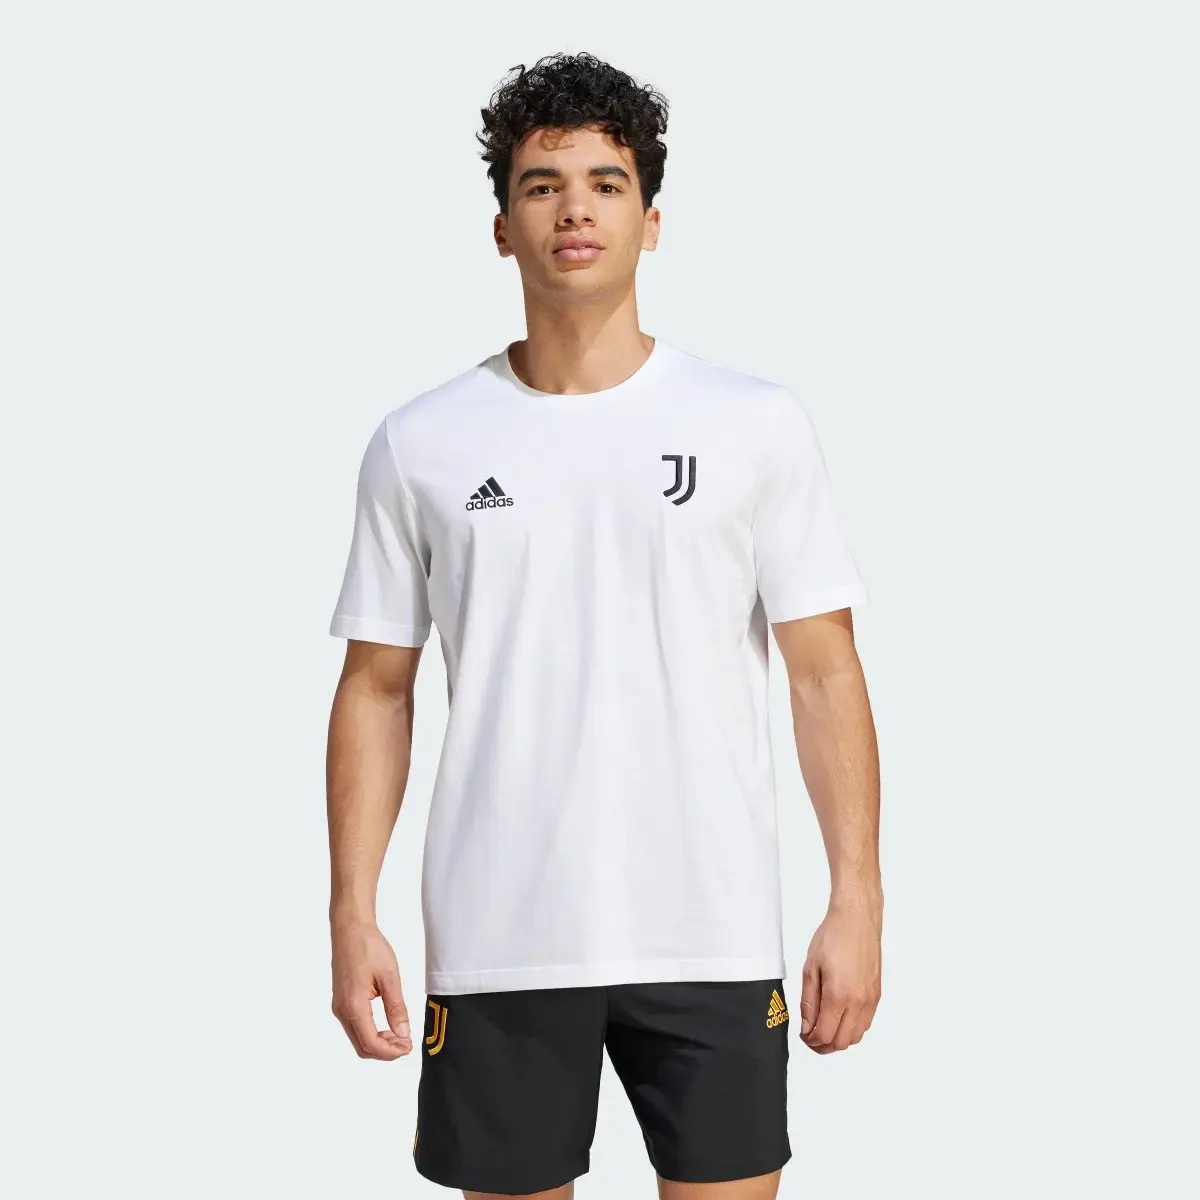 Adidas T-shirt DNA Juventus. 2